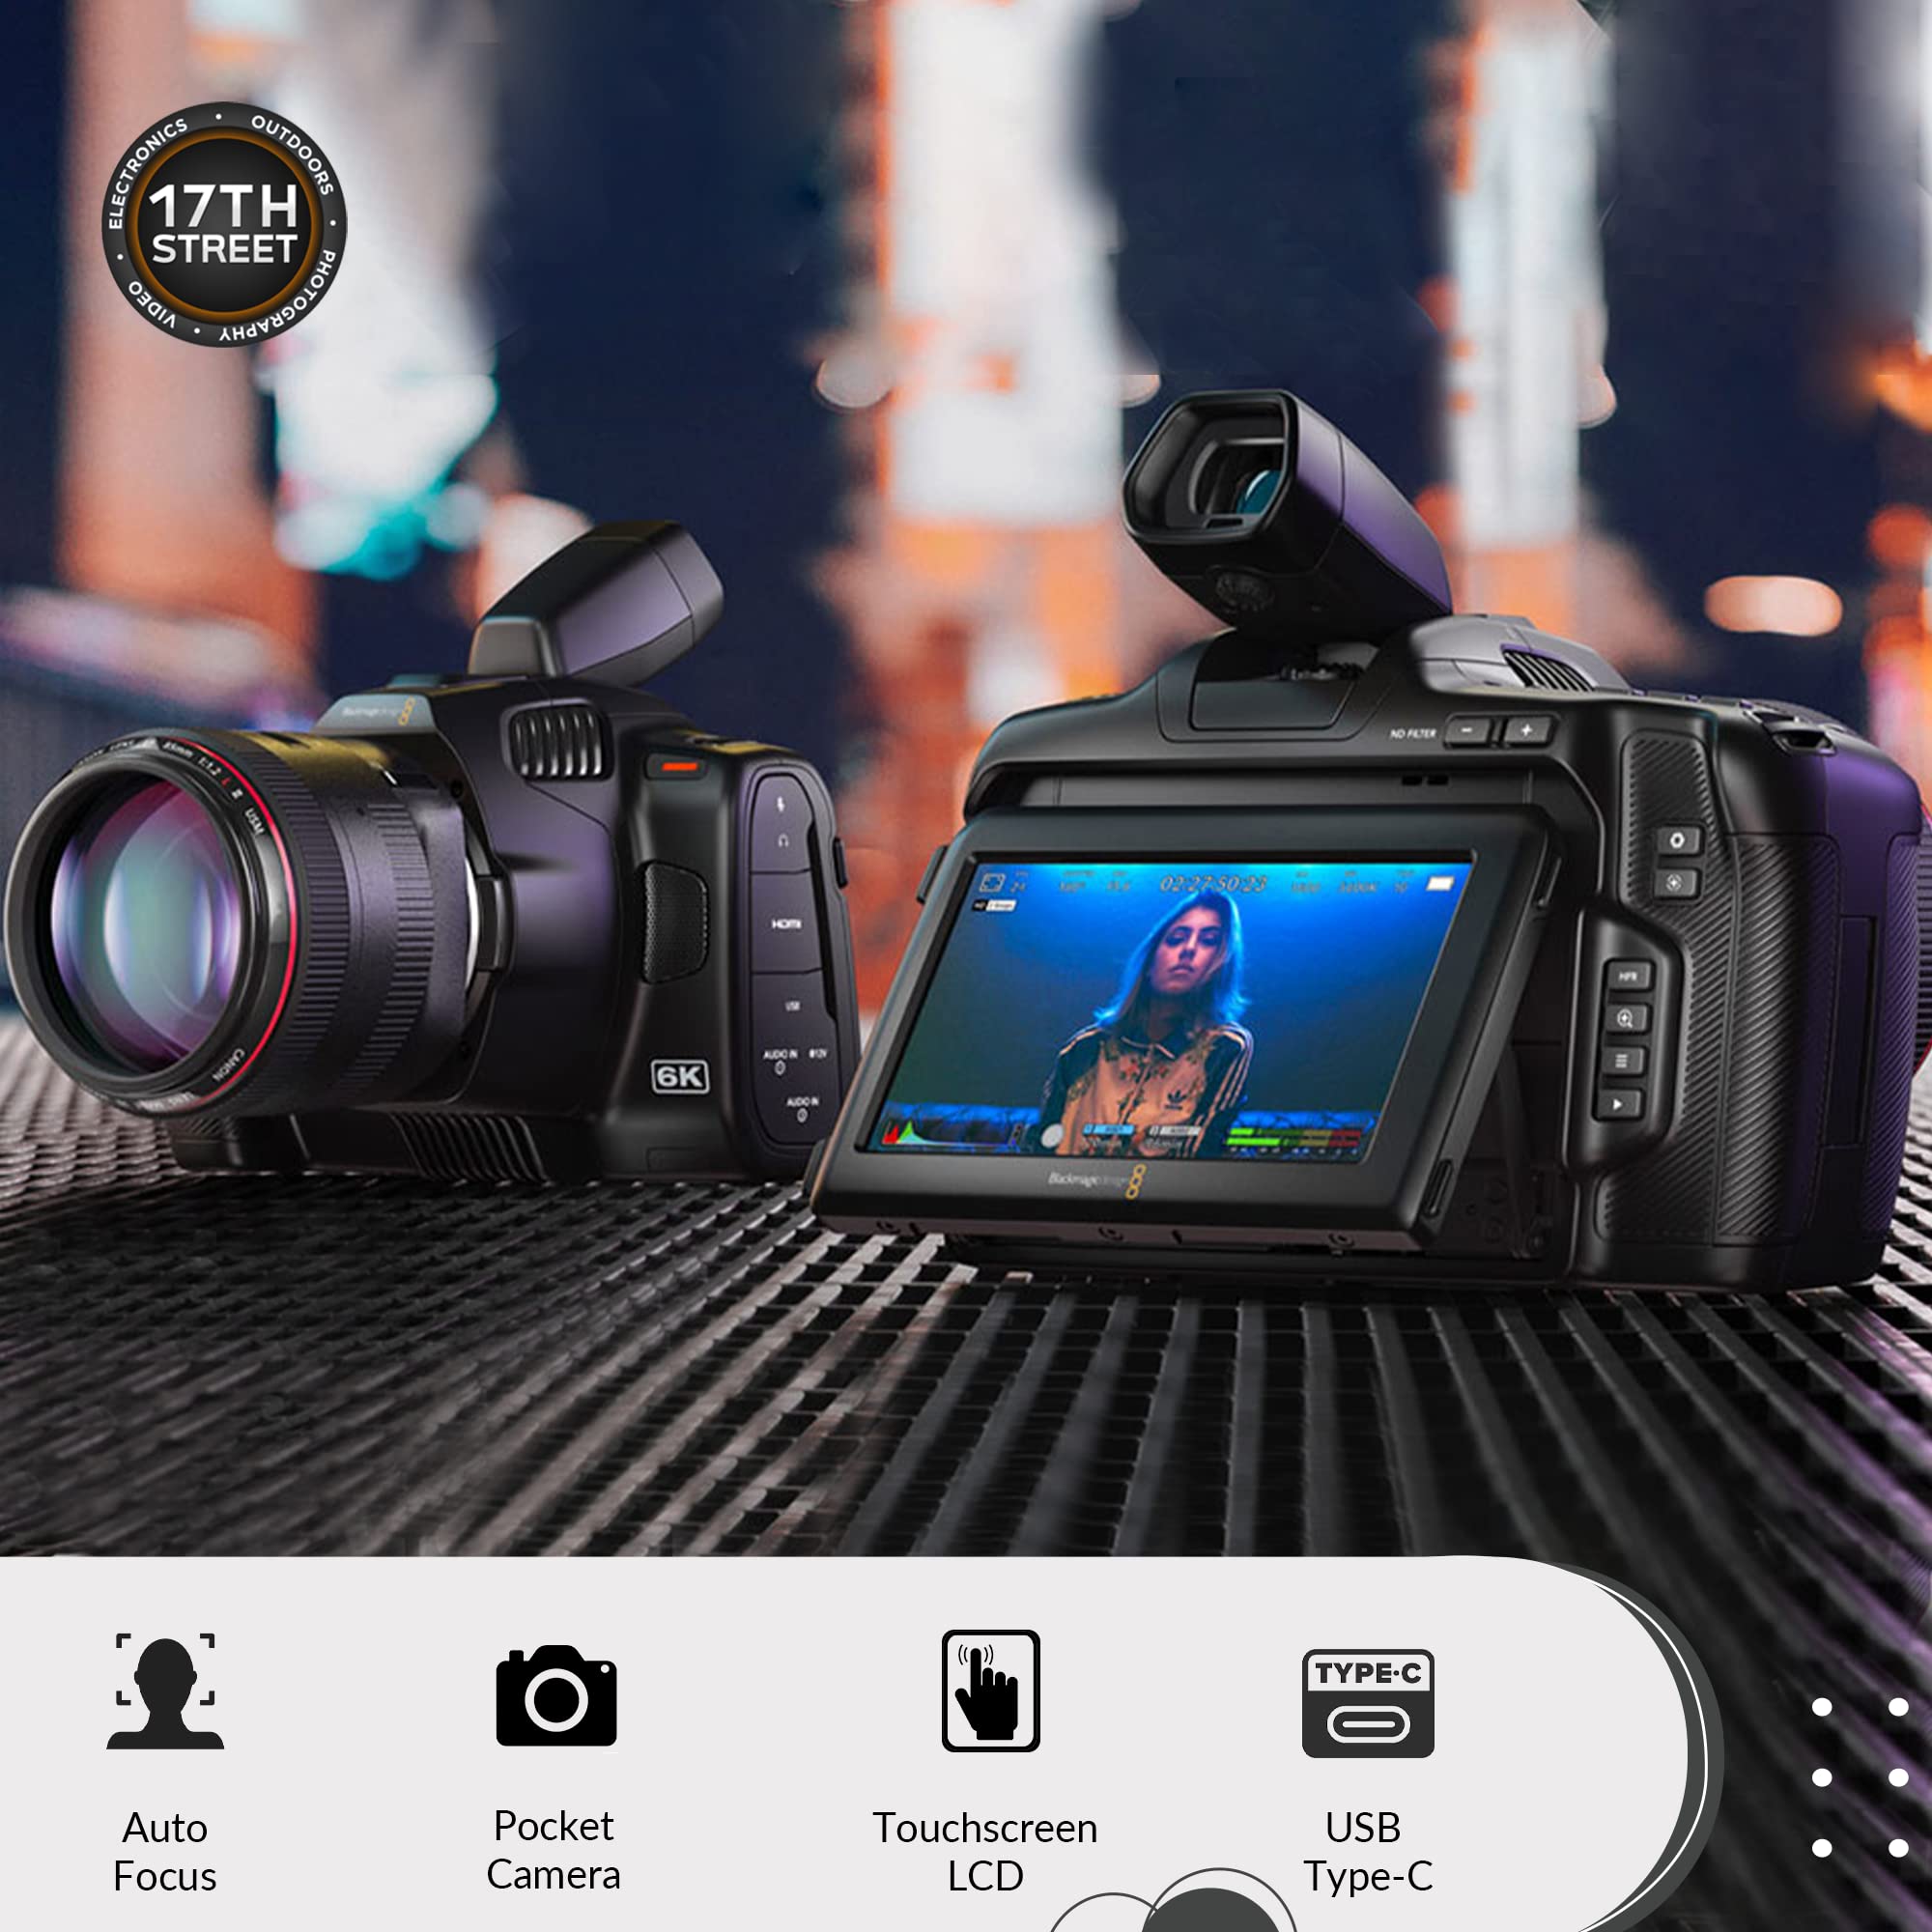 Blackmagic 6K Pro Pocket Design Cinema Camera for Canon EF | 13-Stop Dynamic Range, Super35 HDR Sensor, Sigma 18-35mm F1.8 Lens, 128GB Memory Card, Waith 2600mAh Battery, and Charger Bundle Set